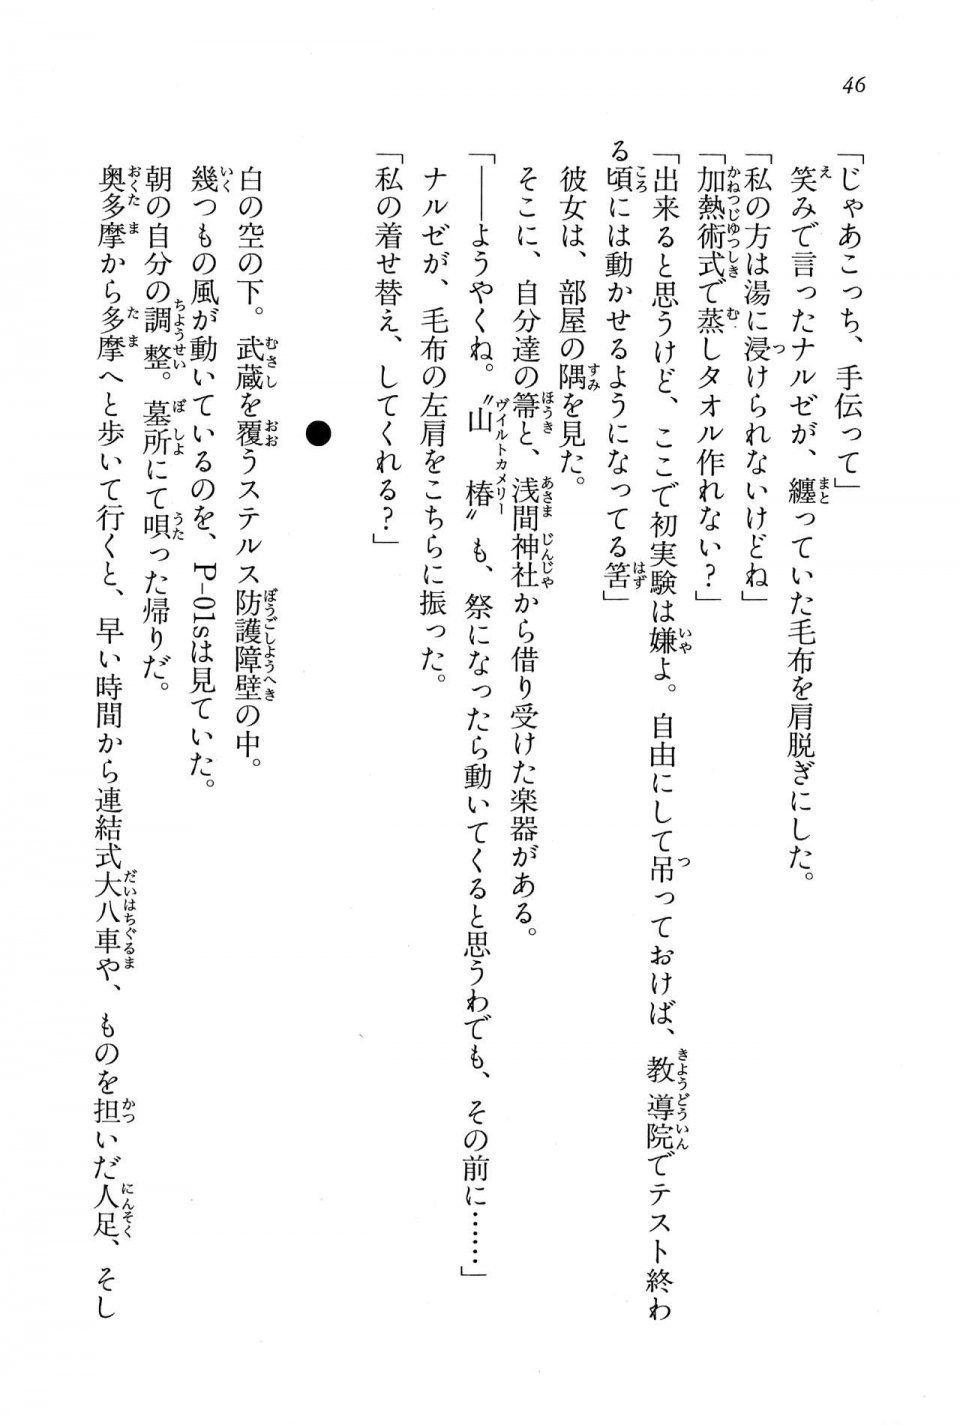 Kyoukai Senjou no Horizon BD Special Mininovel Vol 7(4A) - Photo #50